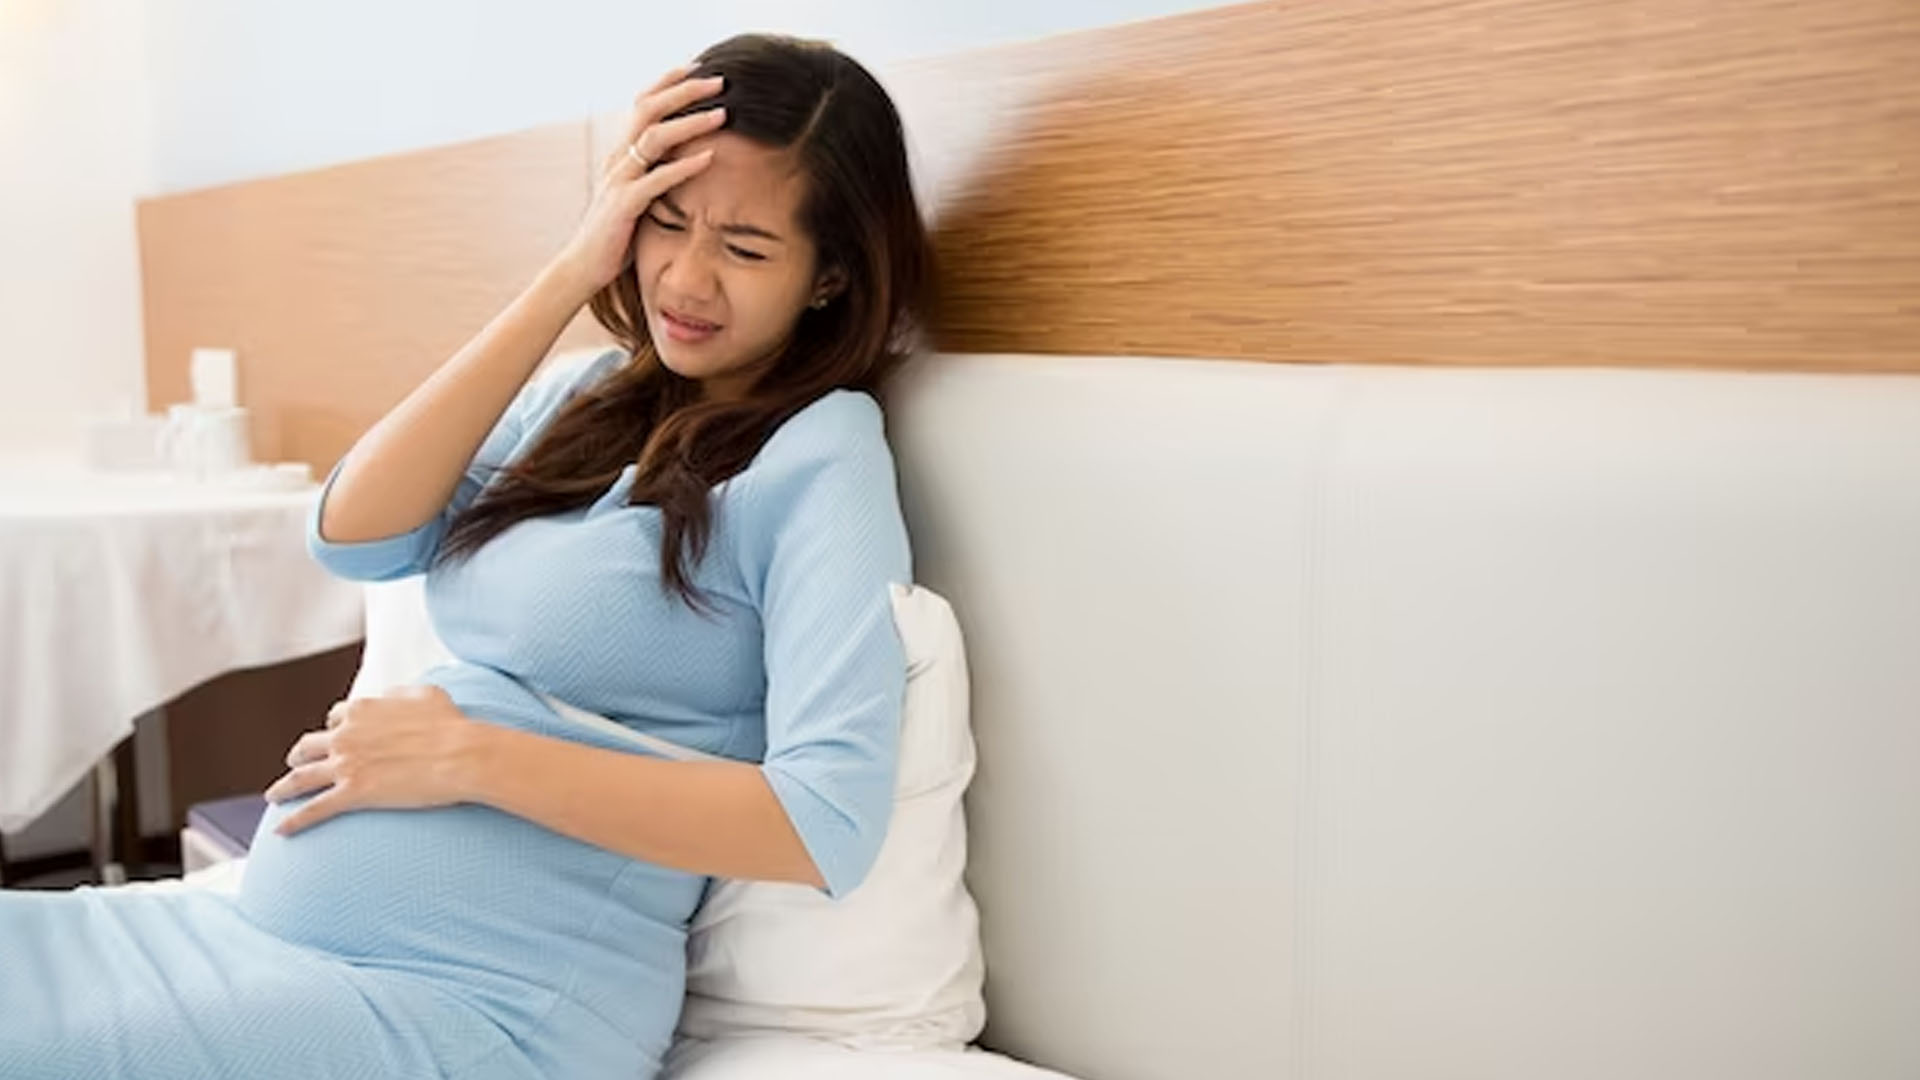 Is Fainting a Symptom of Pregnancy?